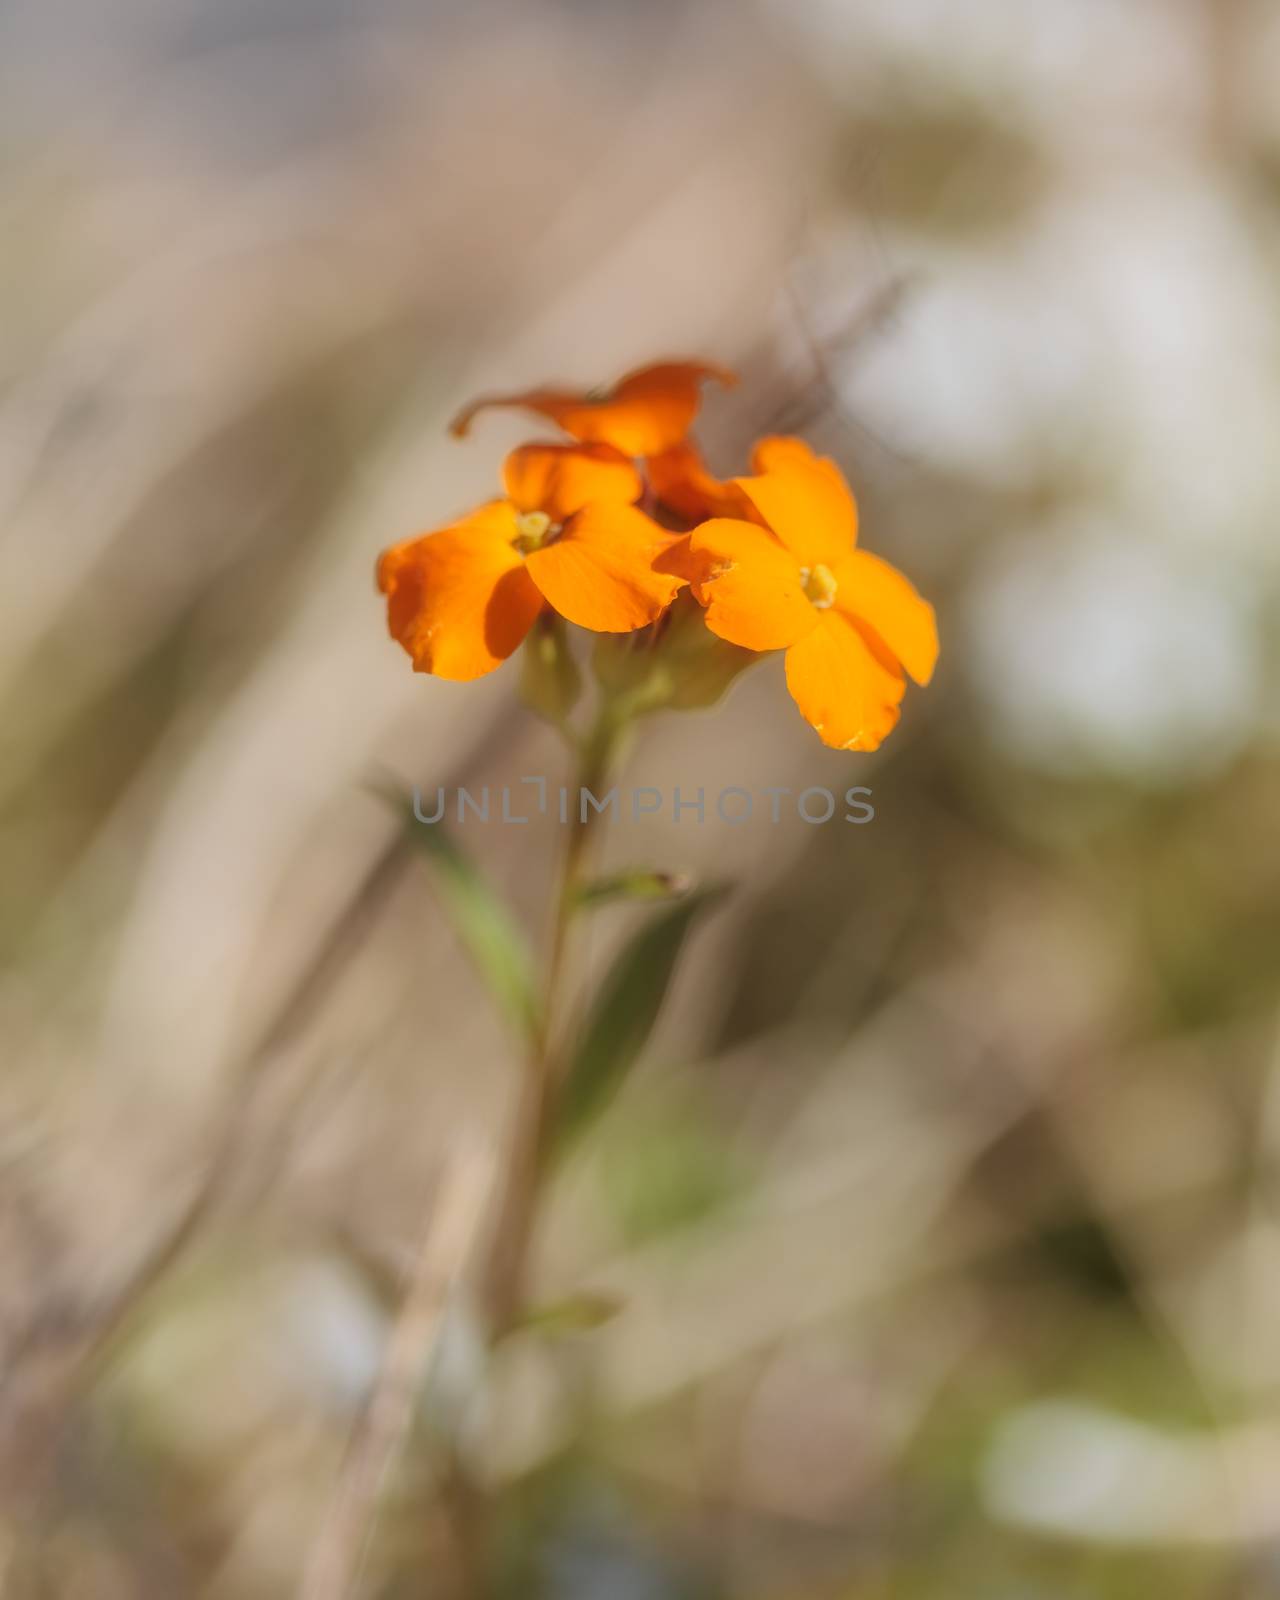 Tiny orange flower with focused petals